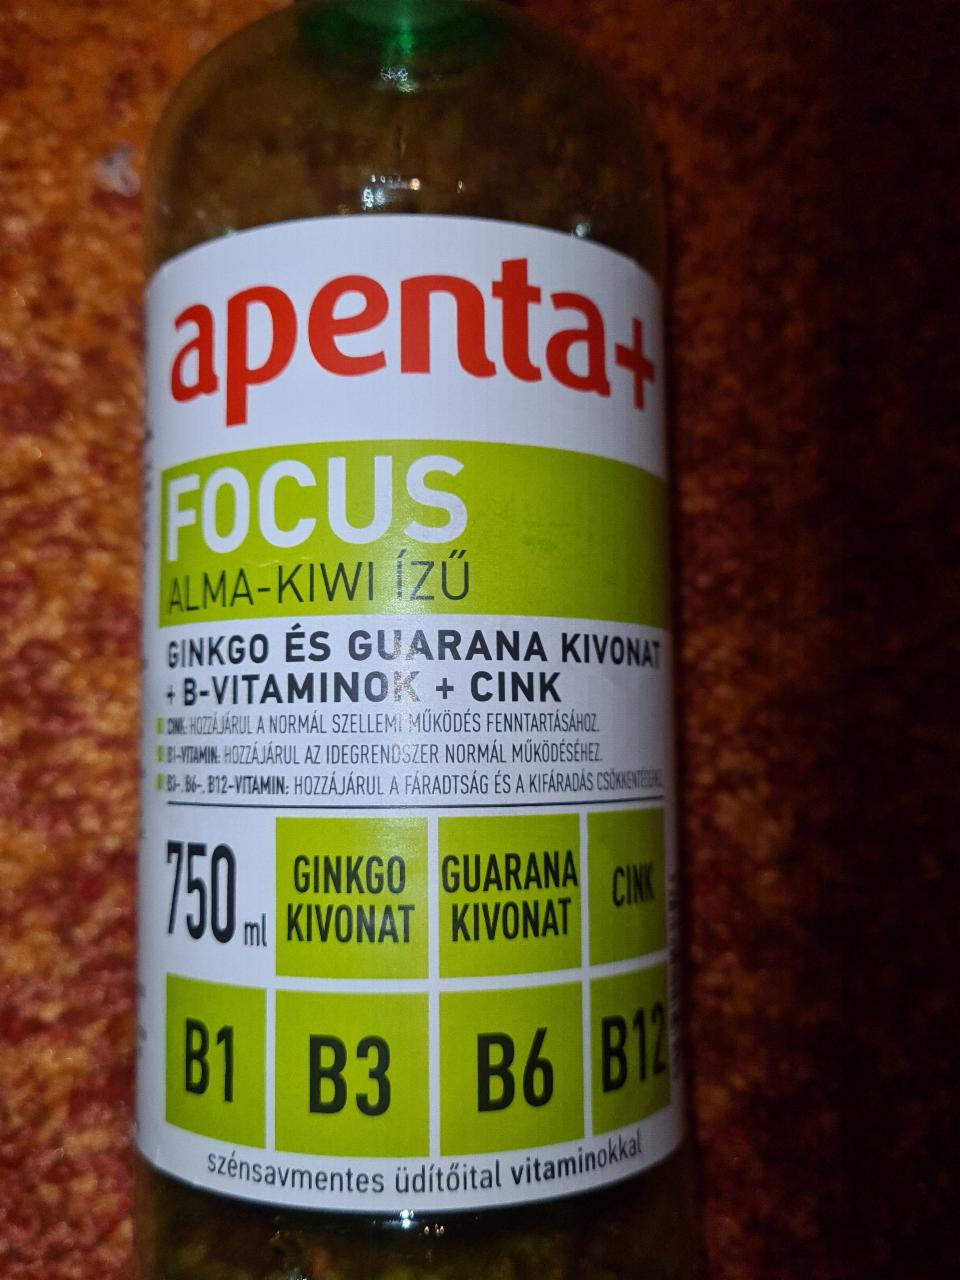 Képek - Focus alma, kiwi Apenta+